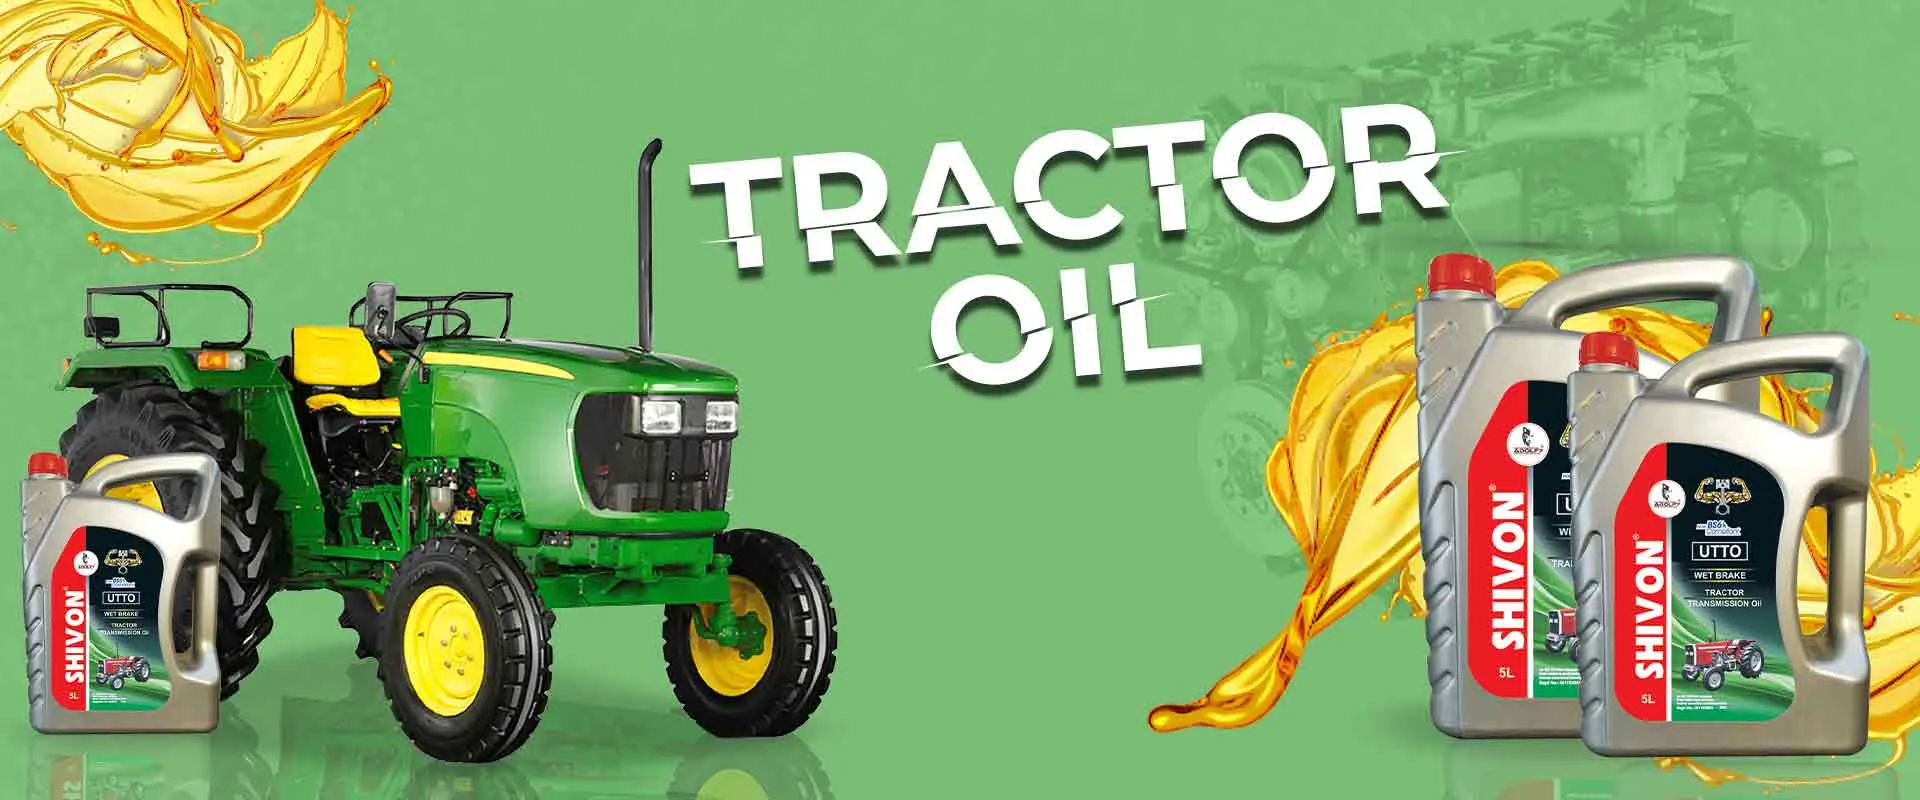 Tractor Oil In Konch